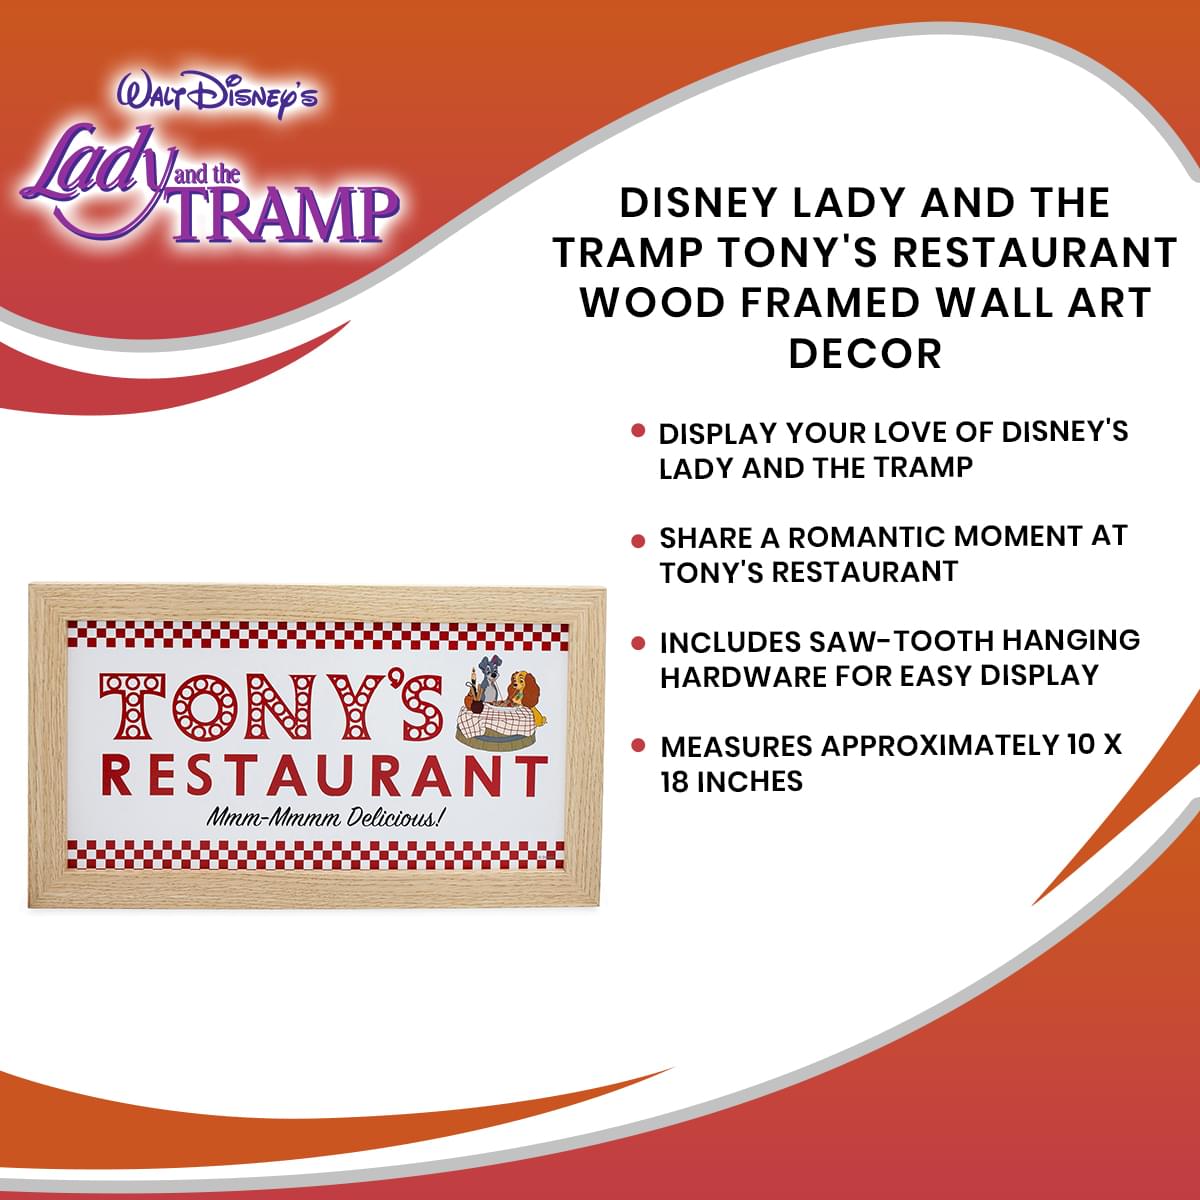 Disney Lady and the Tramp Tony's Restaurant Wood Framed Wall Art Decor